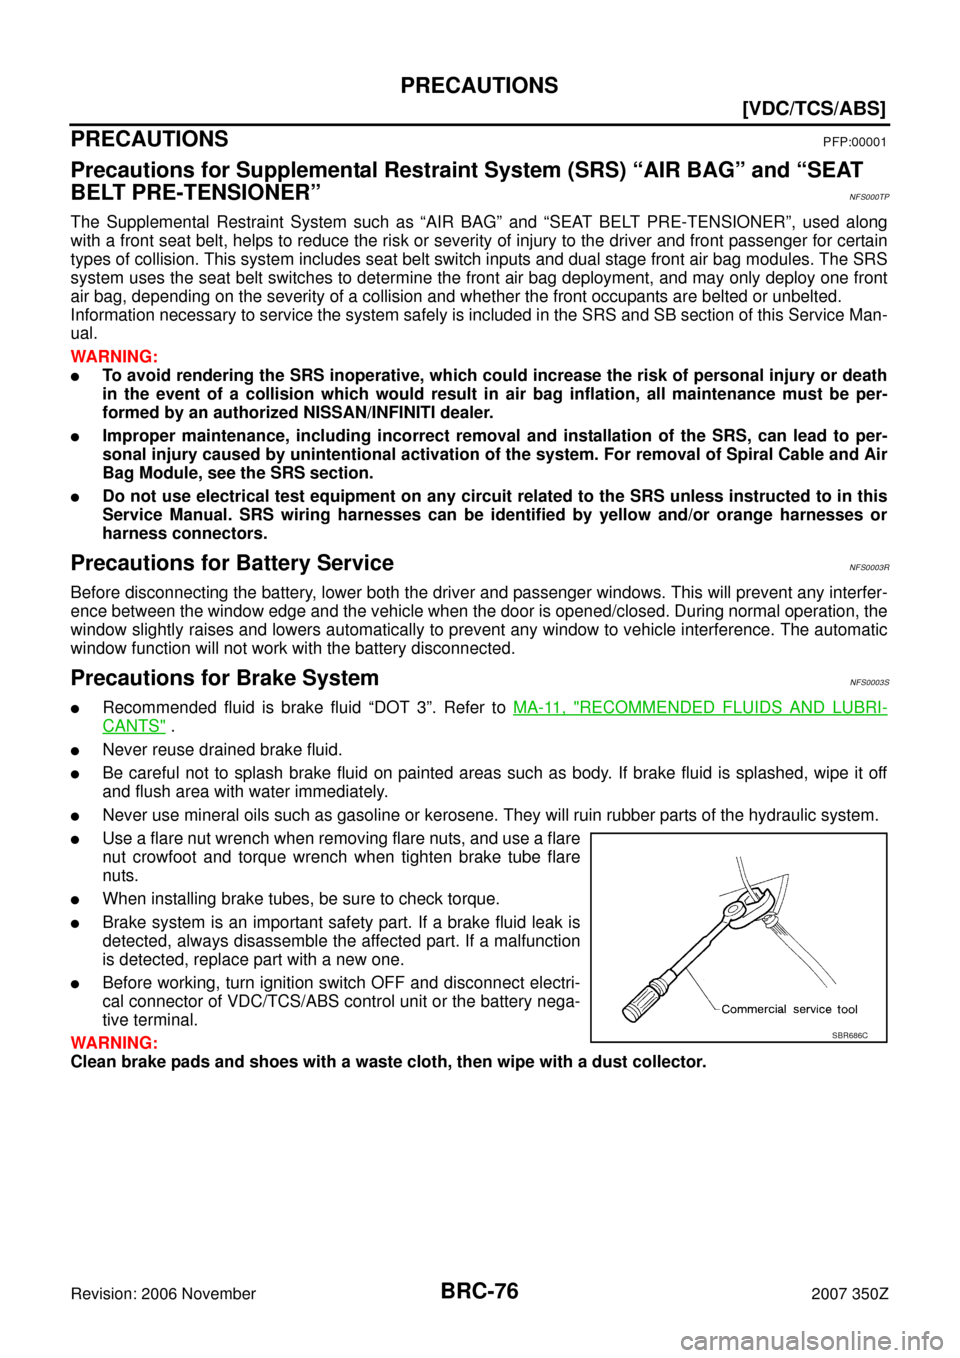 NISSAN 350Z 2007 Z33 Brake Control System Workshop Manual BRC-76
[VDC/TCS/ABS]
PRECAUTIONS
Revision: 2006 November2007 350Z
[VDC/TCS/ABS]PRECAUTIONSPFP:00001
Precautions for Supplemental Restraint System (SRS) “AIR BAG” and “SEAT 
BELT PRE-TENSIONER”